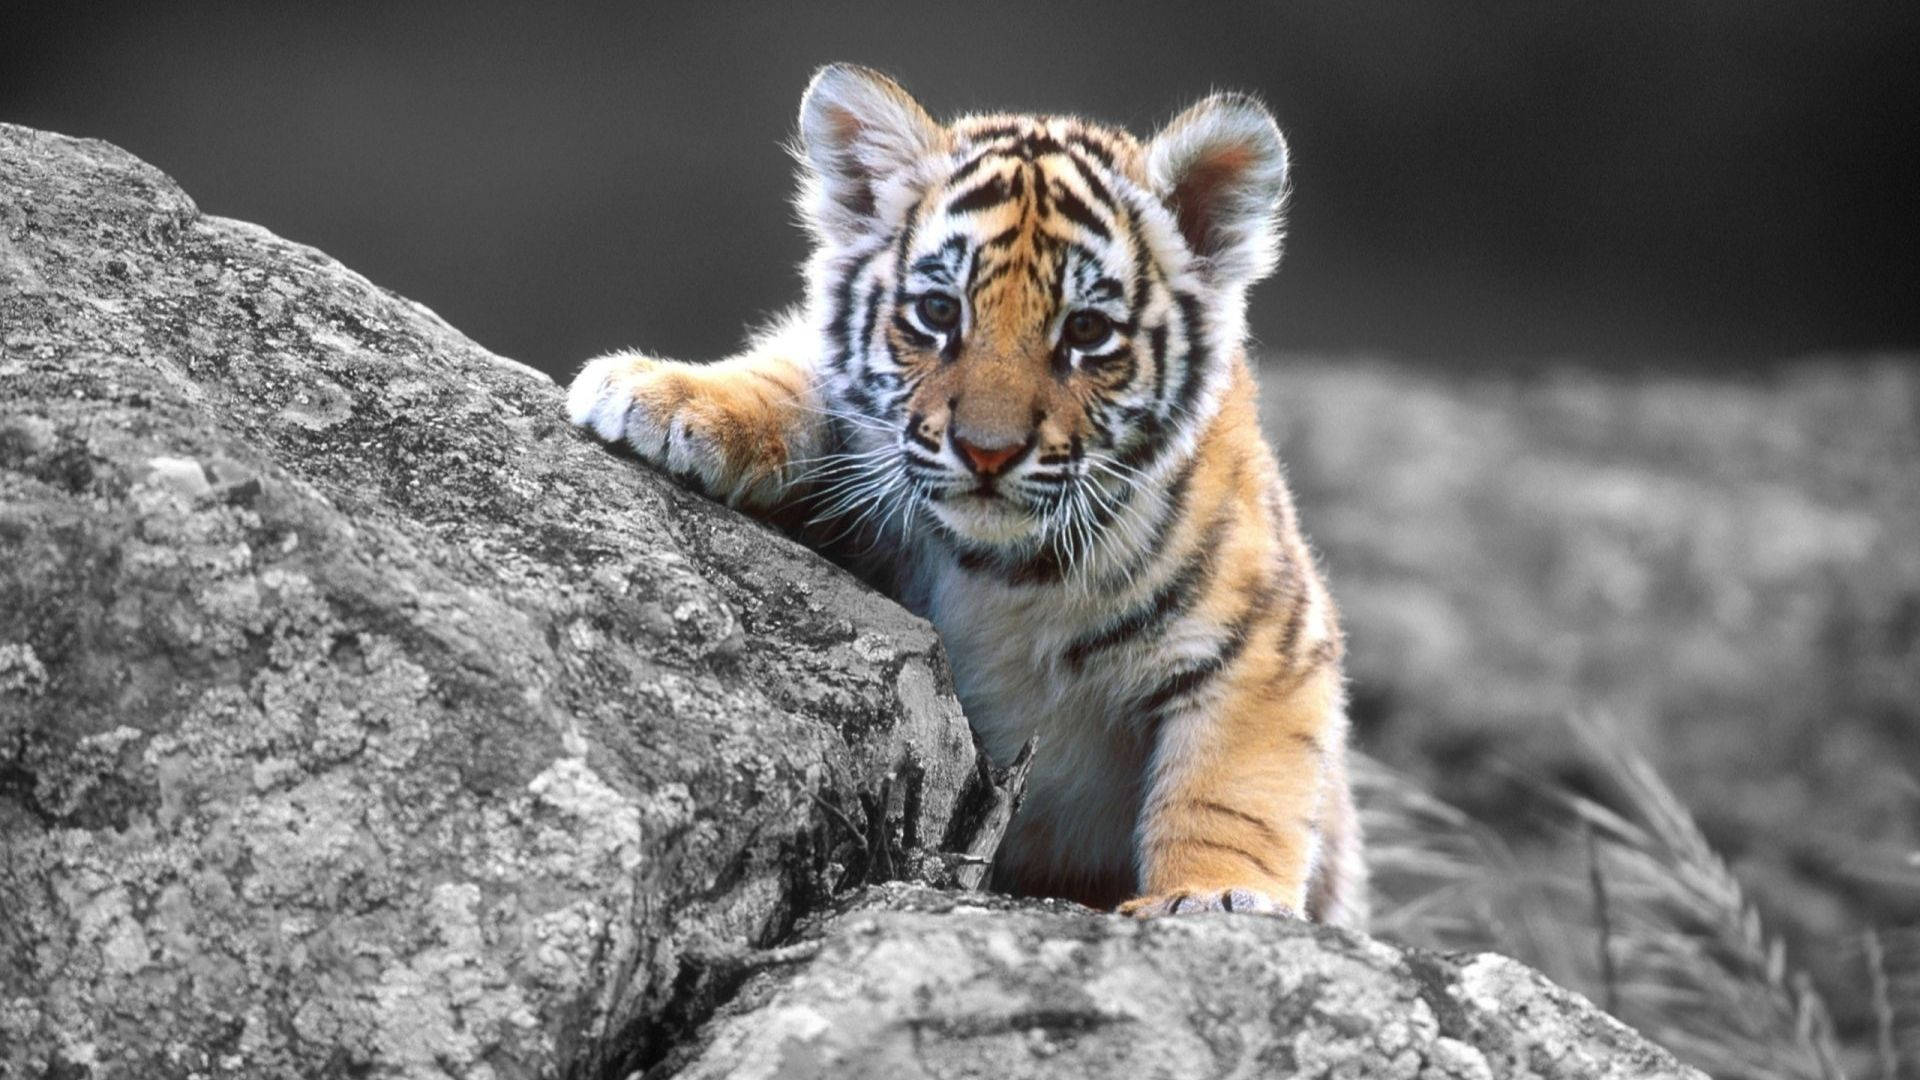 Baby Animal Tiger Behind Rocks